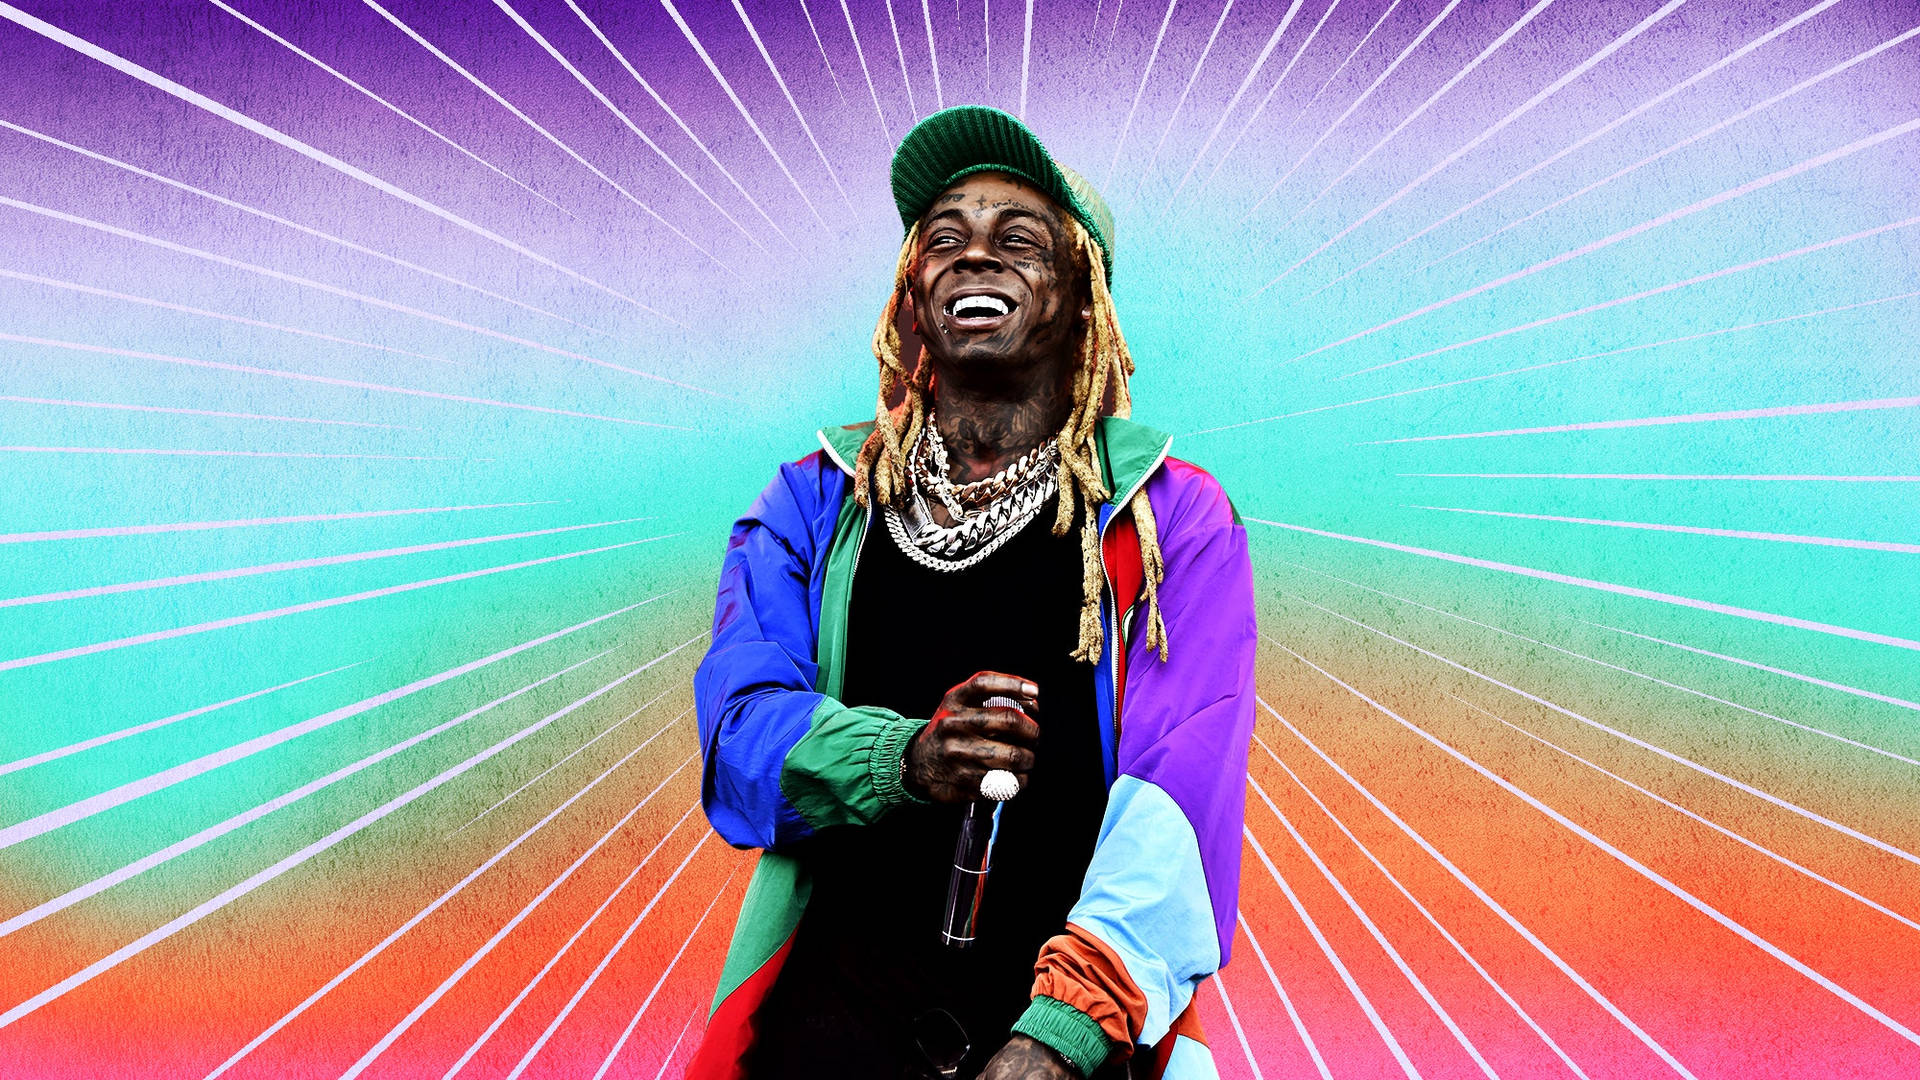 Lil Wayne Background Photos